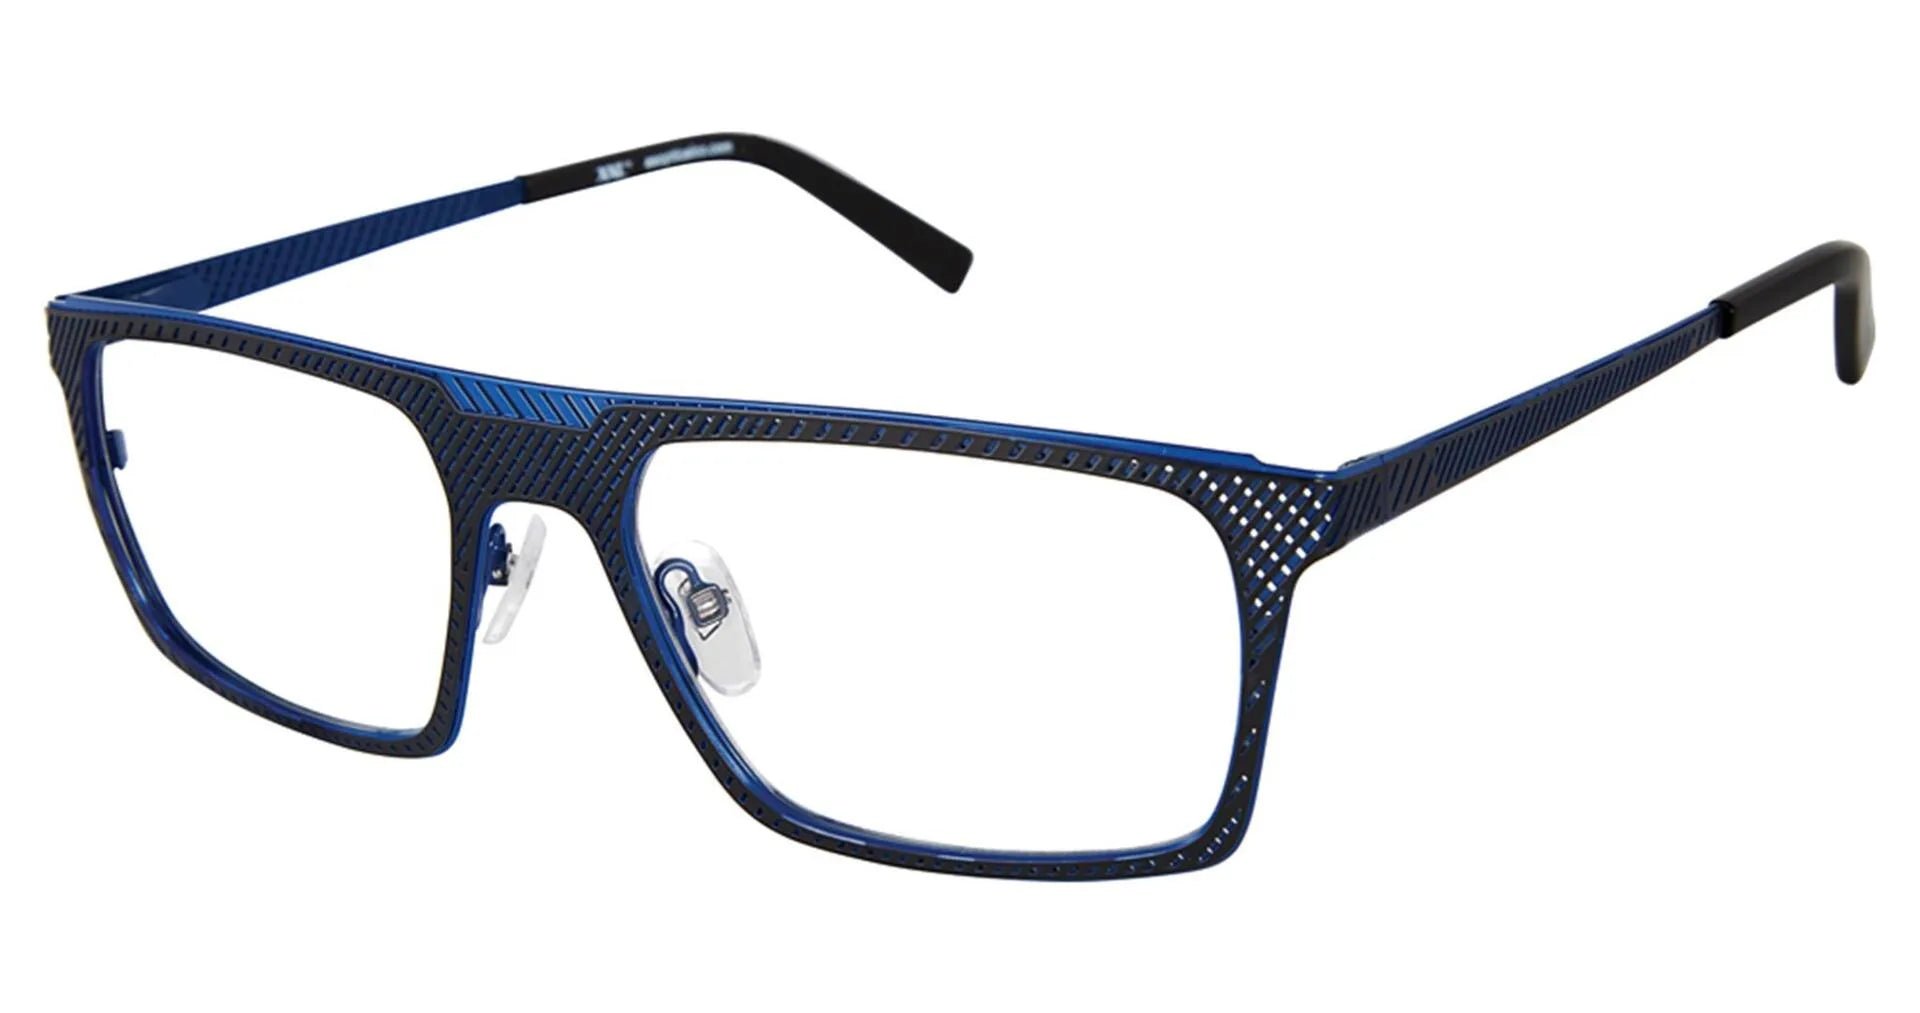 XXL Eyewear Centurion Eyeglasses Black